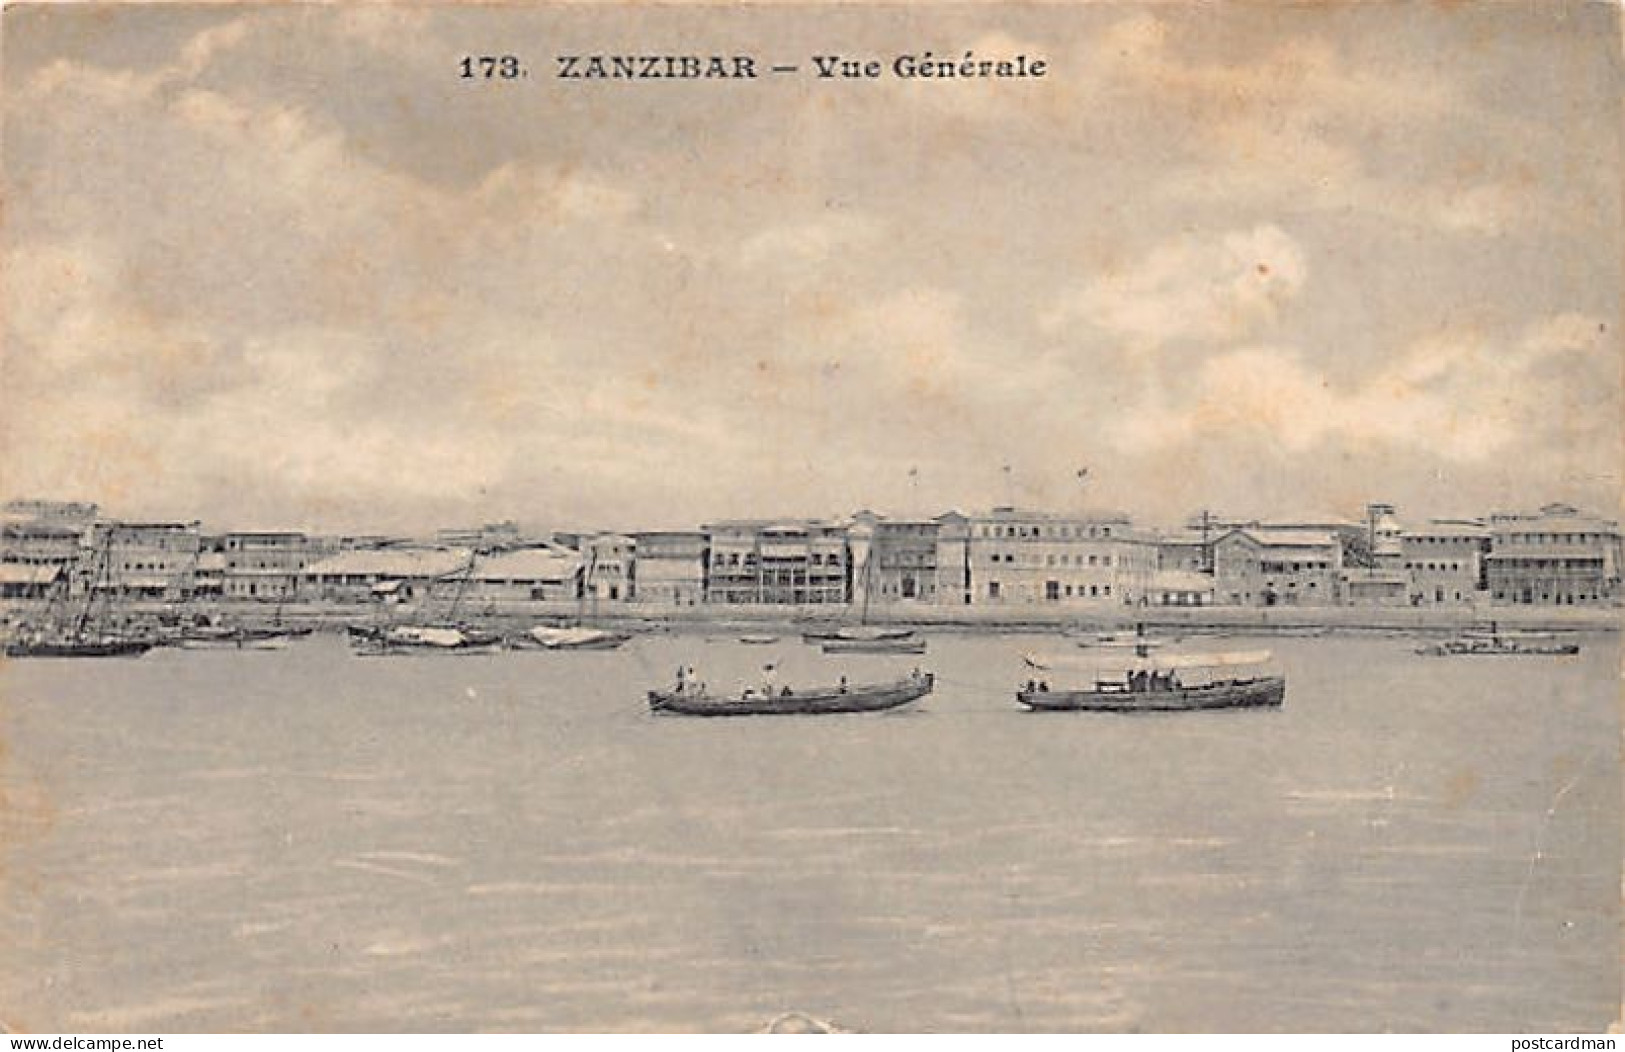 Tanzania - ZANZIBAR - General View From The Sea - Publ. Messageries Maritimes 173 - Tanzanía